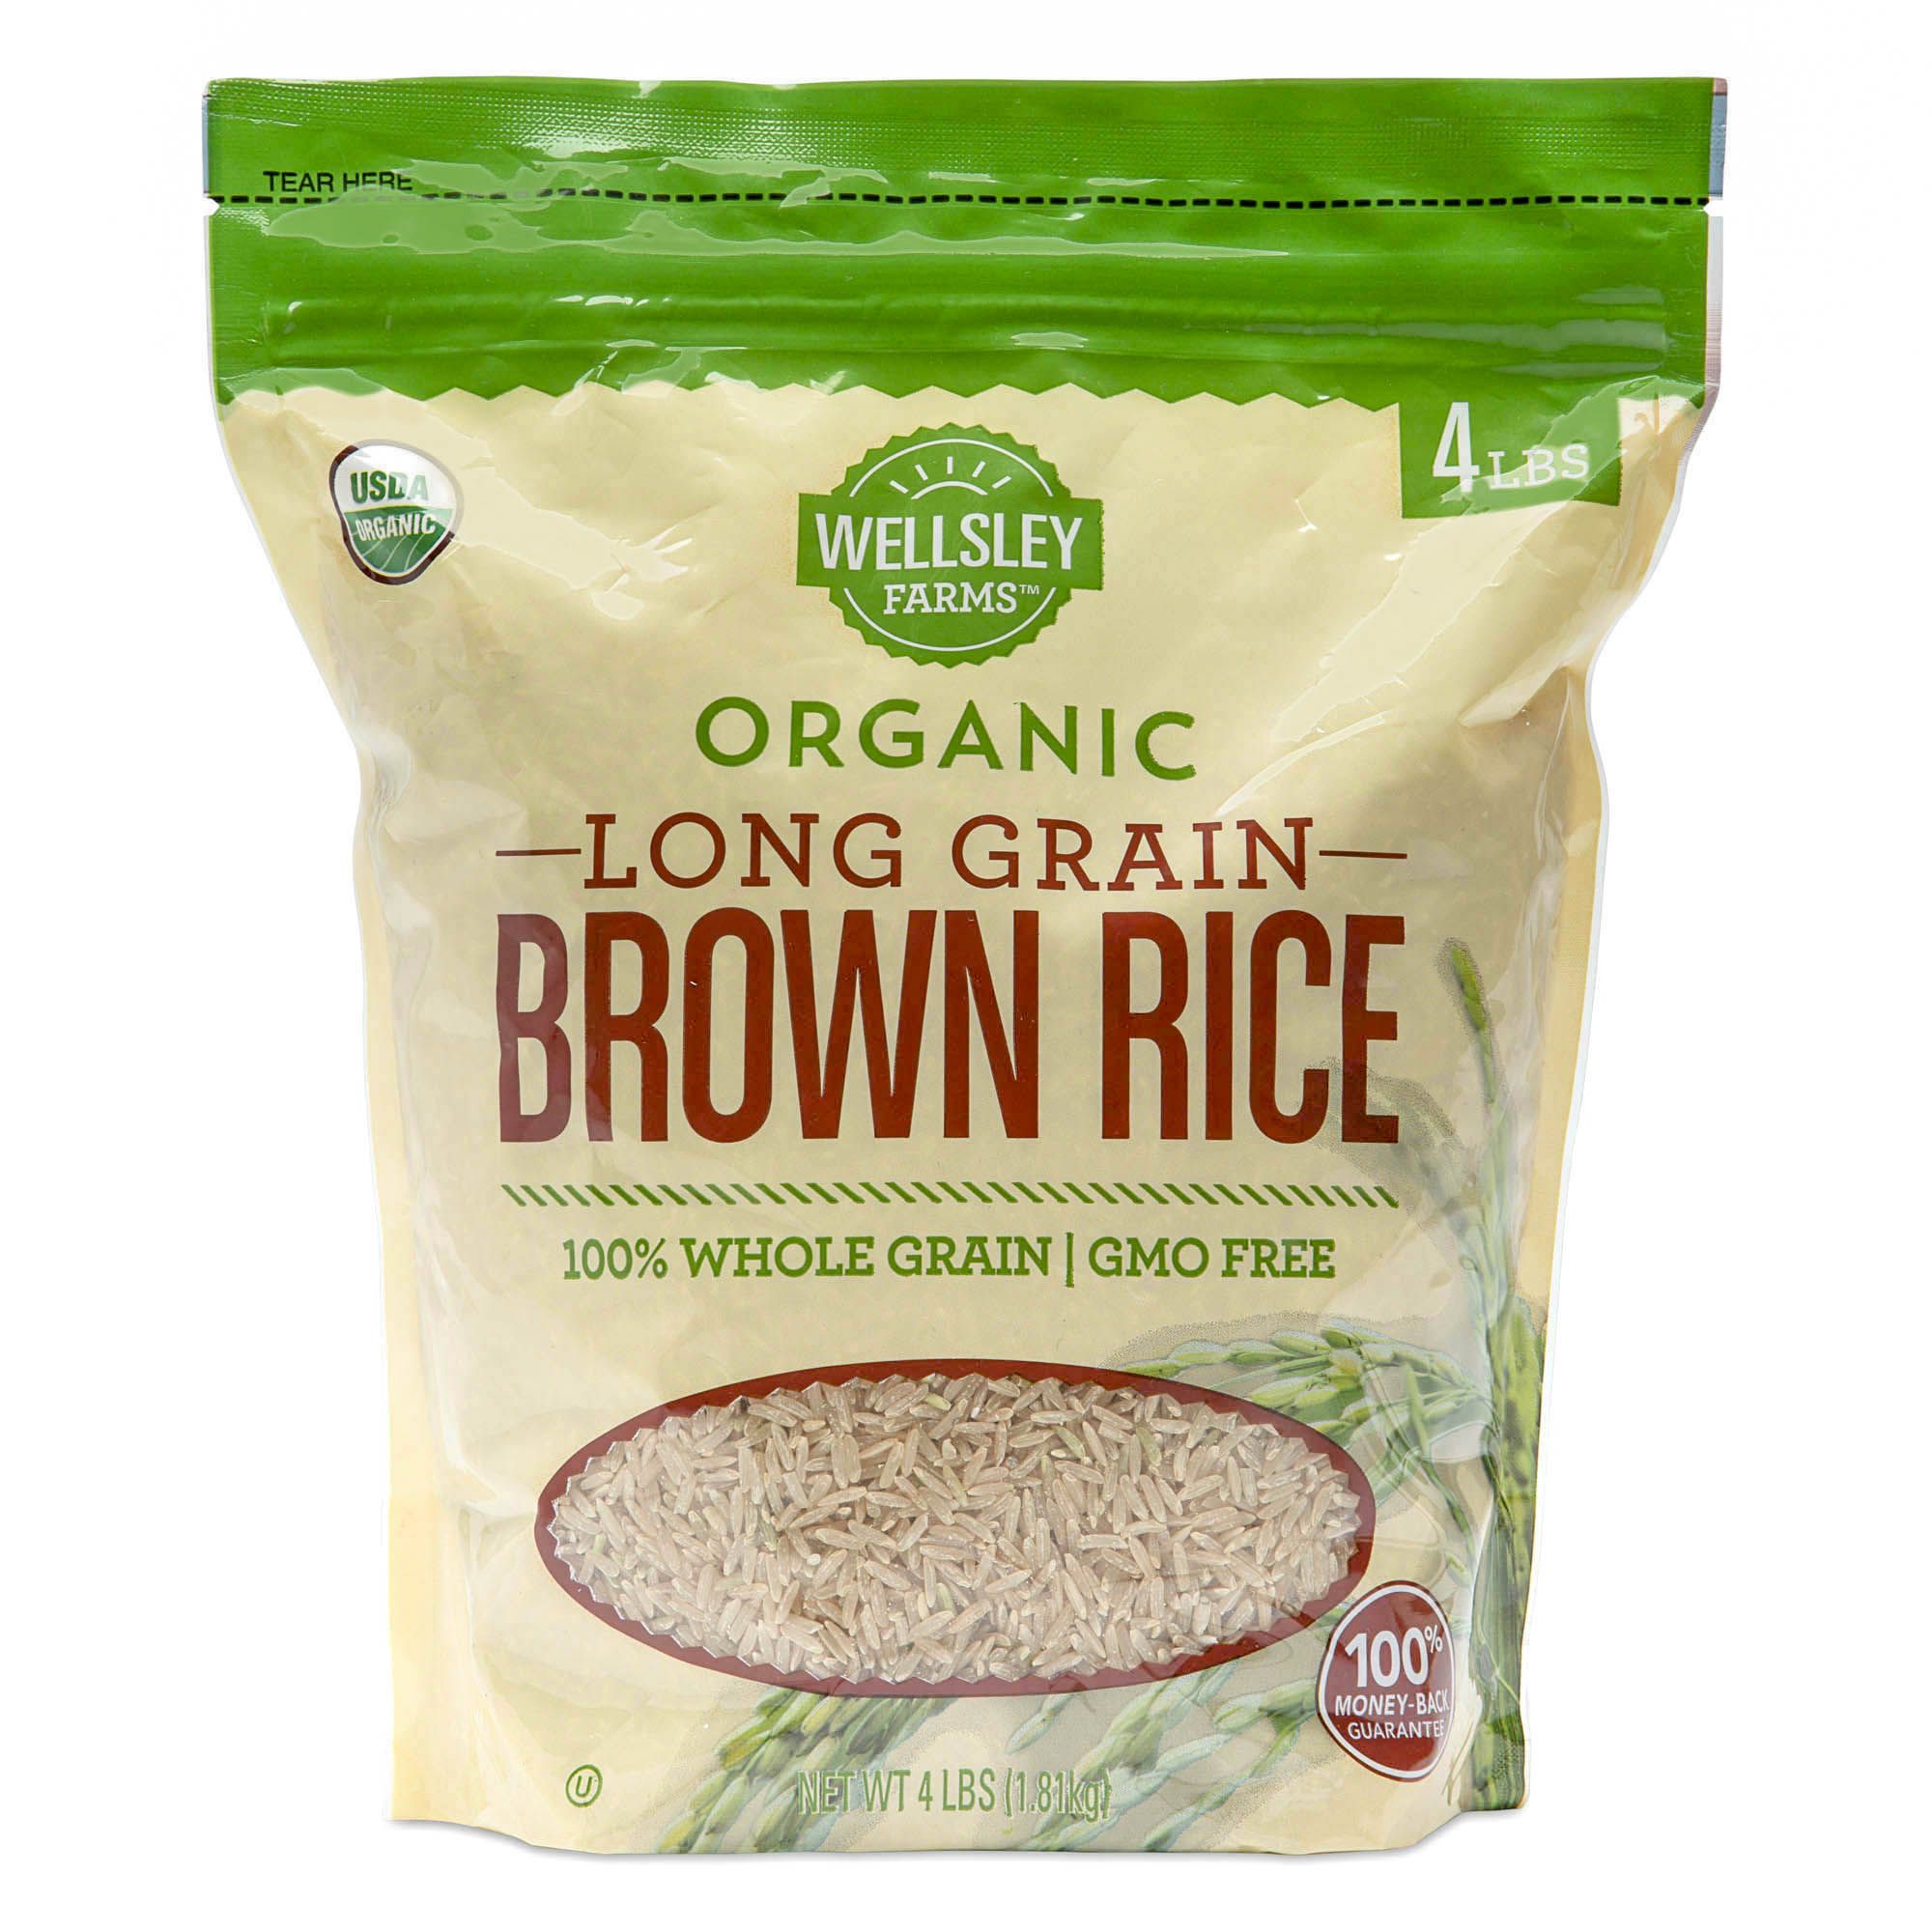 Wellsley Farms Organic Long-Grain Brown Rice, 4 lbs.